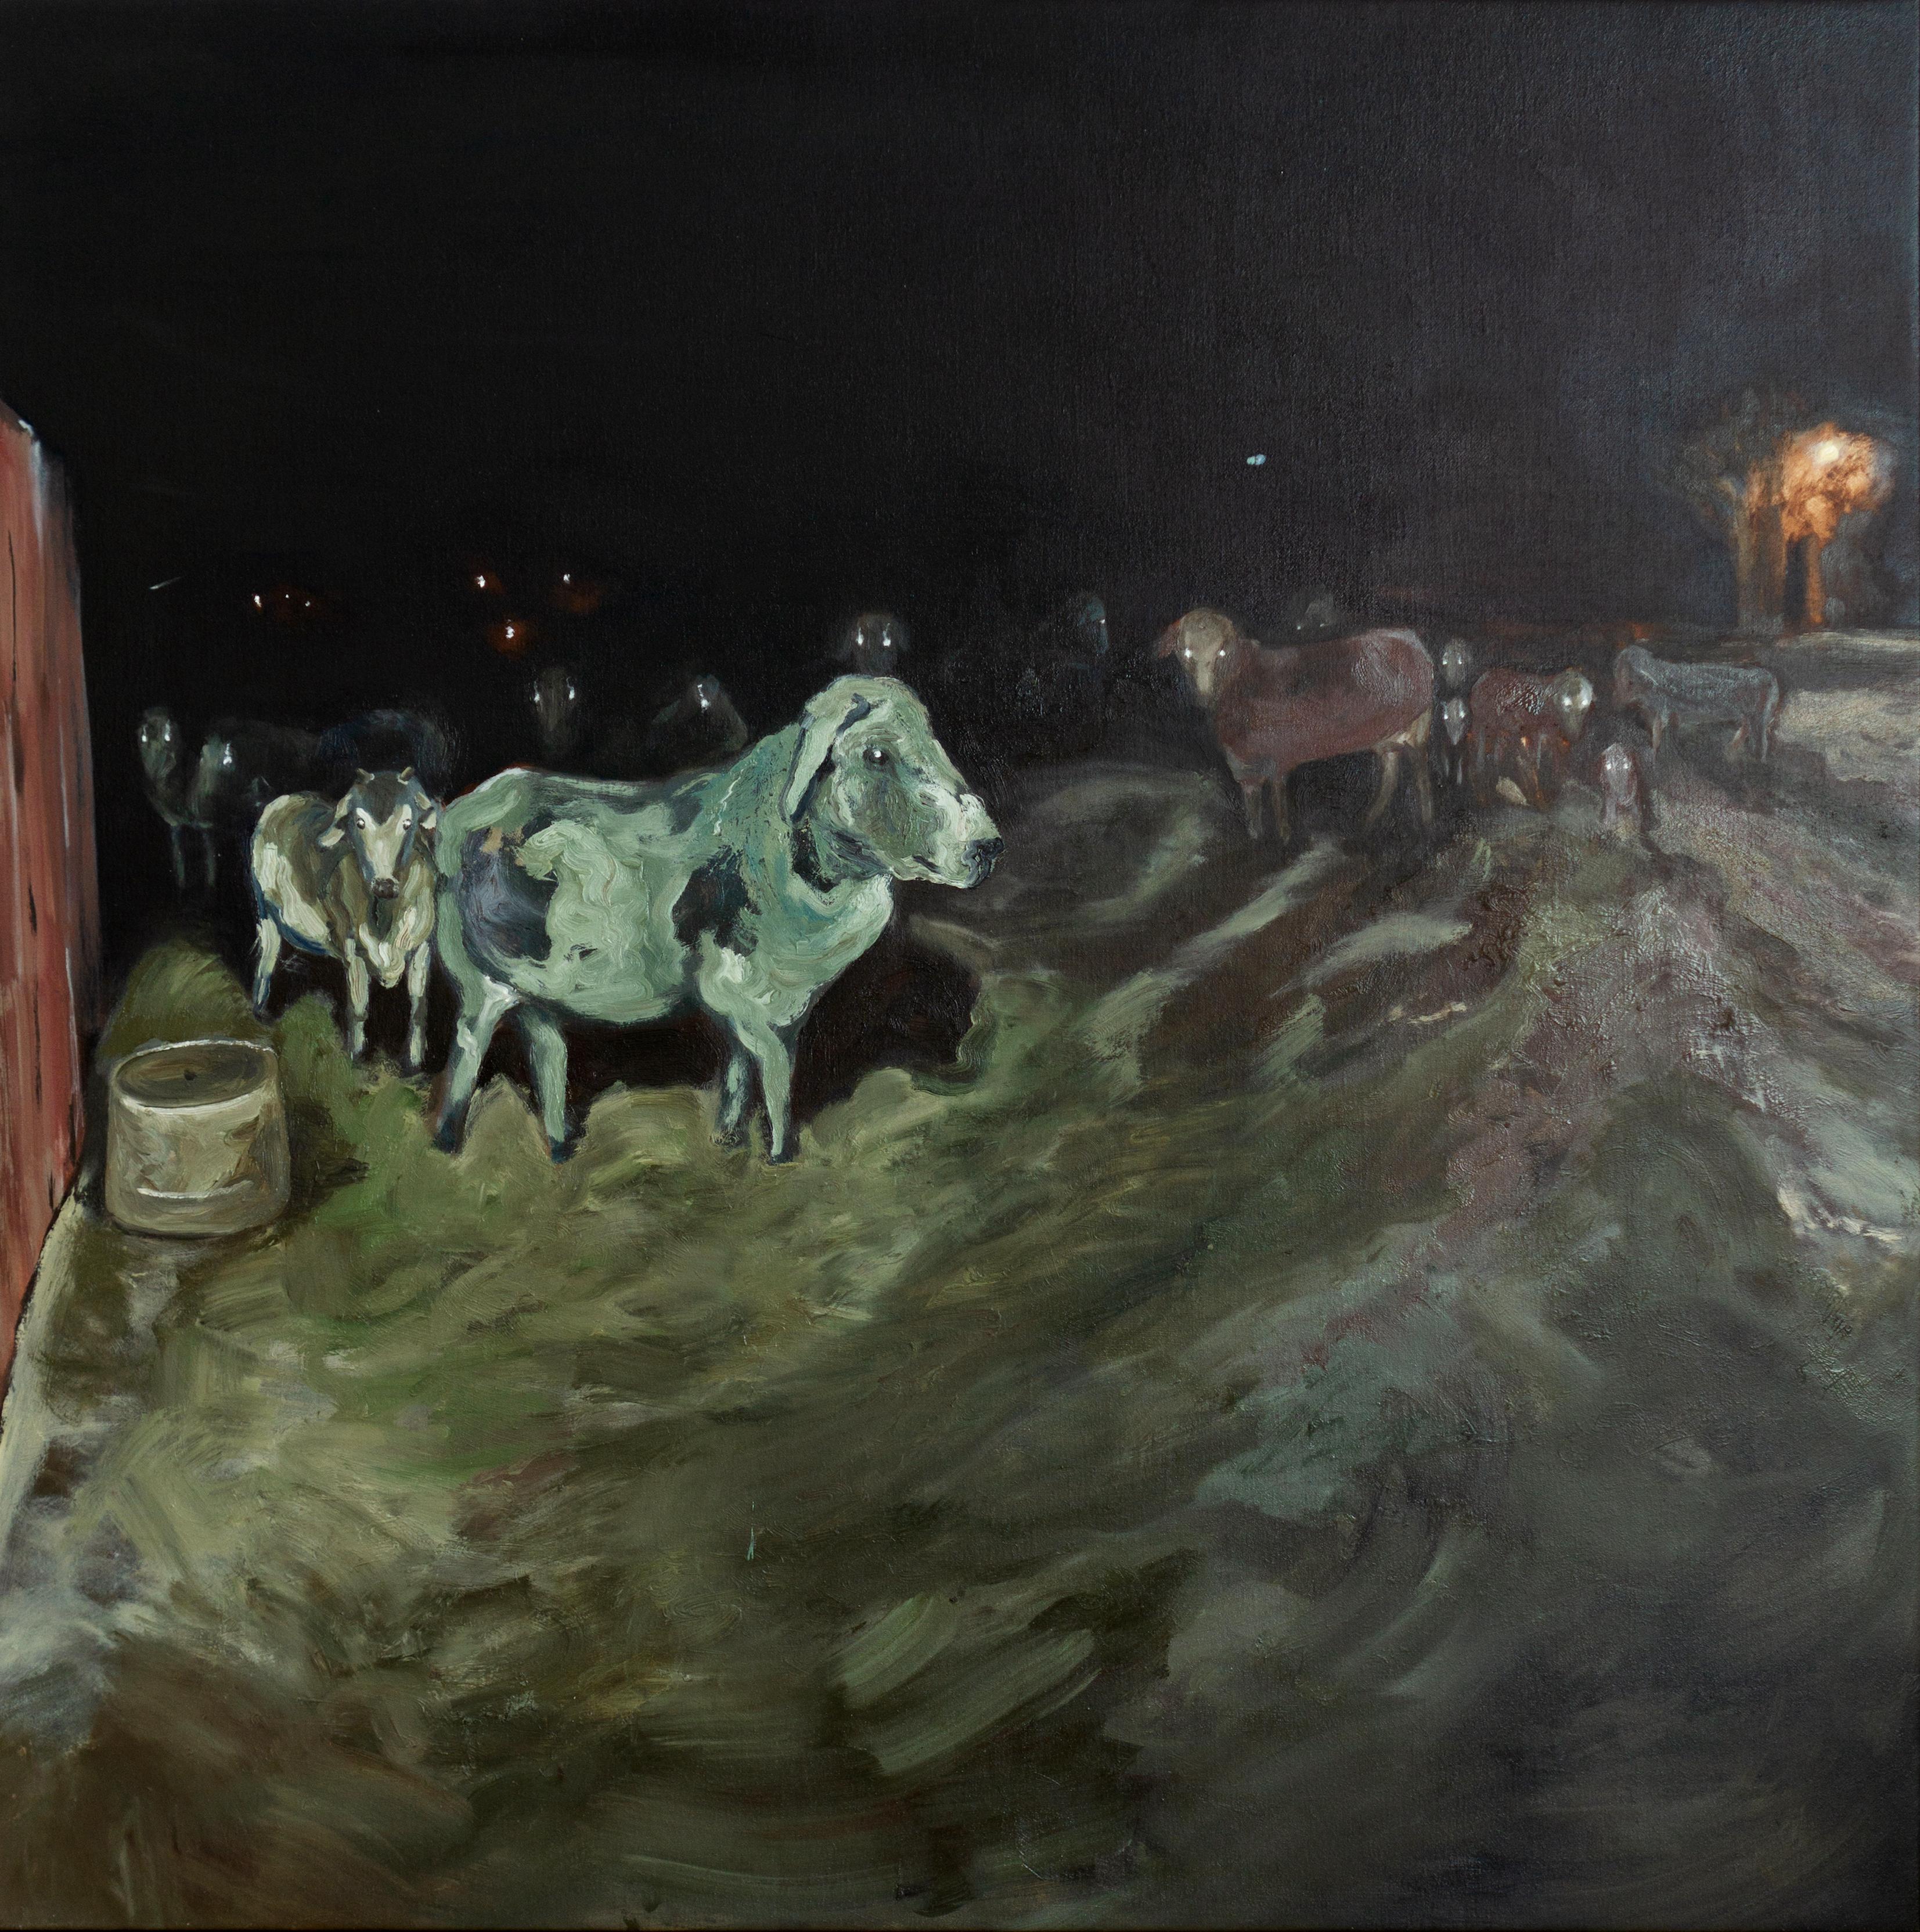 Kazakh Contemporary Art by Baurjan Aralov - Cows Watching You Cry